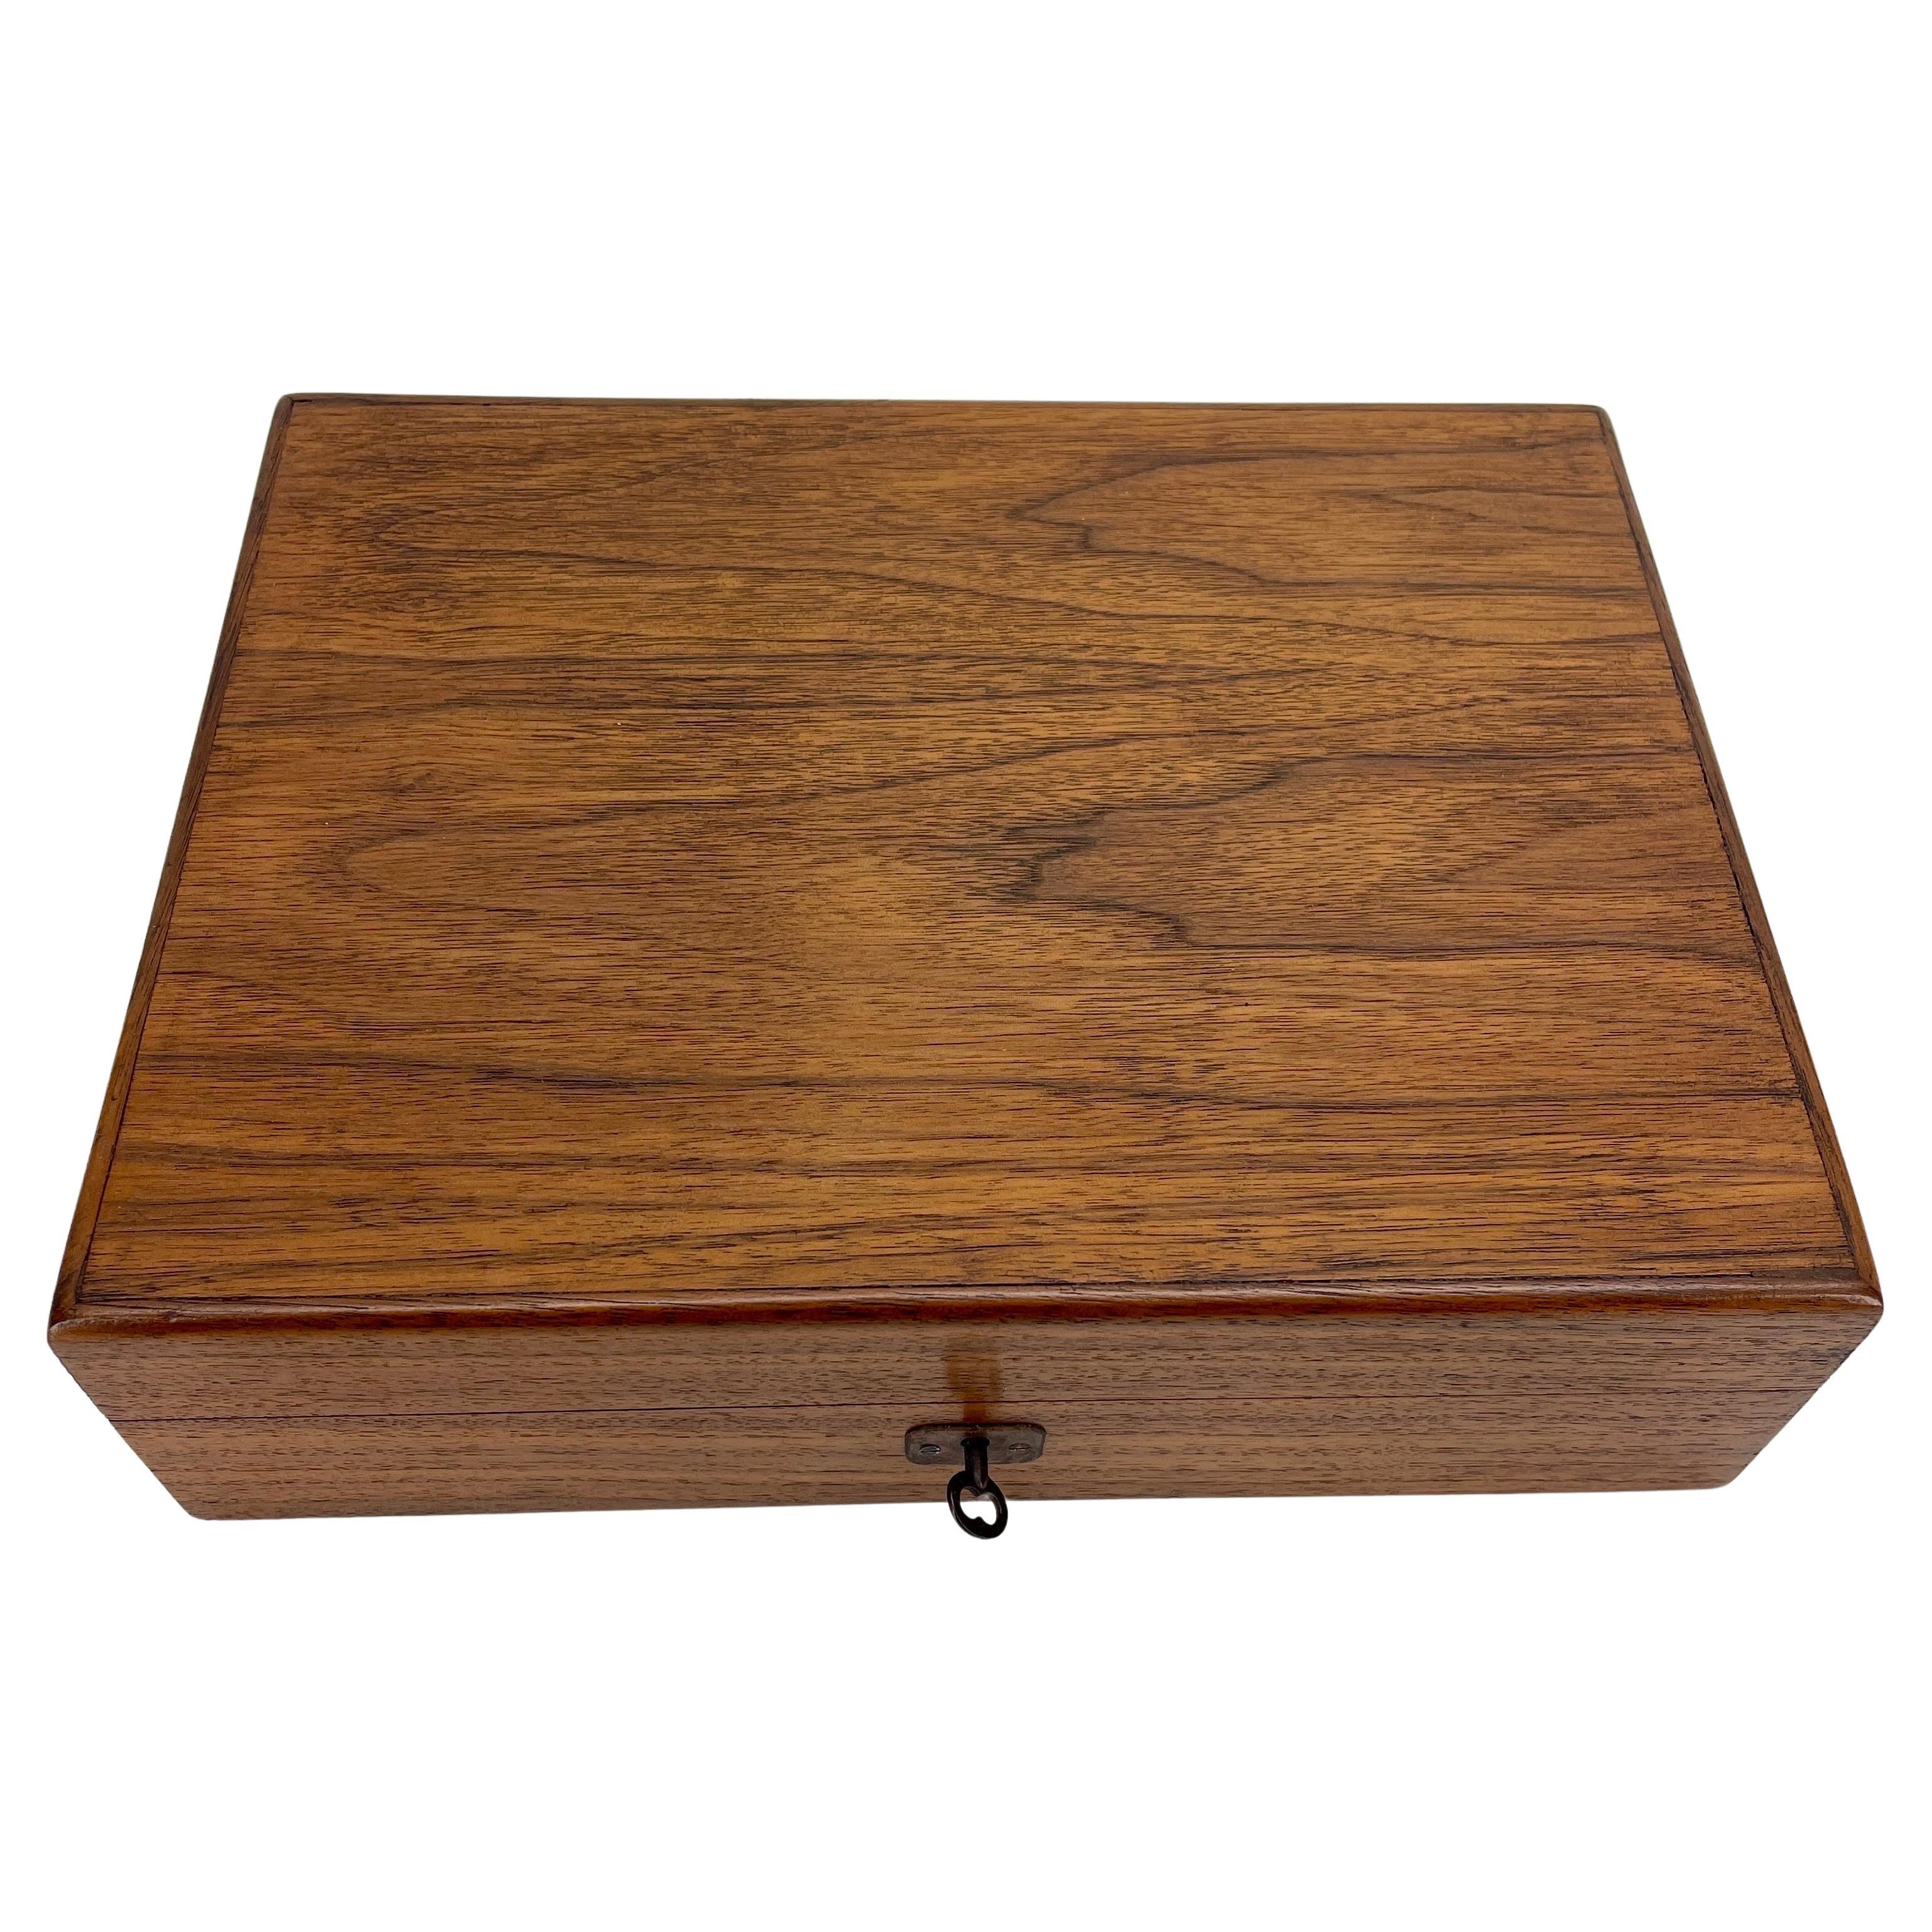 English Alfred Dunhill of London Wood Humidor Box With Key and Lock.